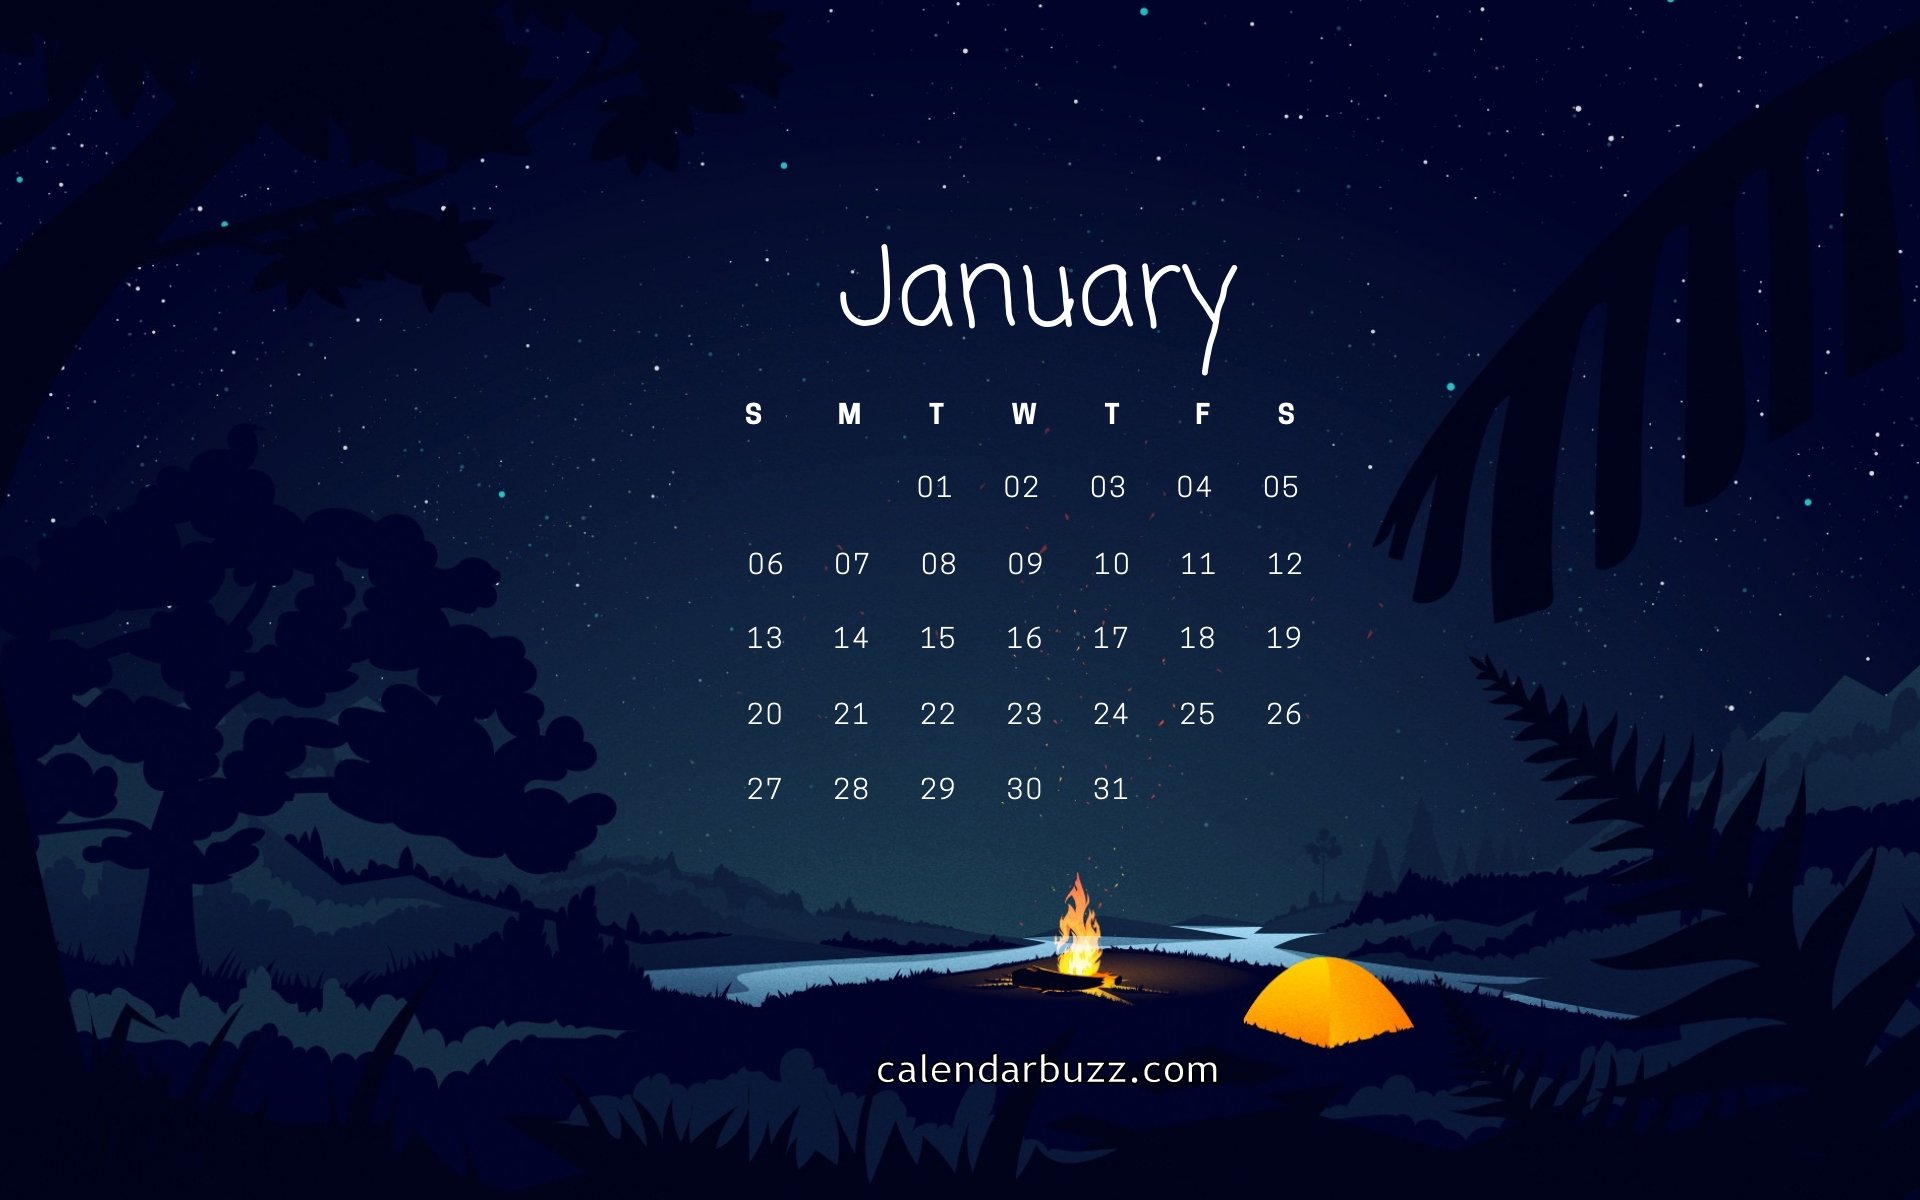 Free January 2019 Calendar Wallpapers Download CalendarBuzz 1920x1200